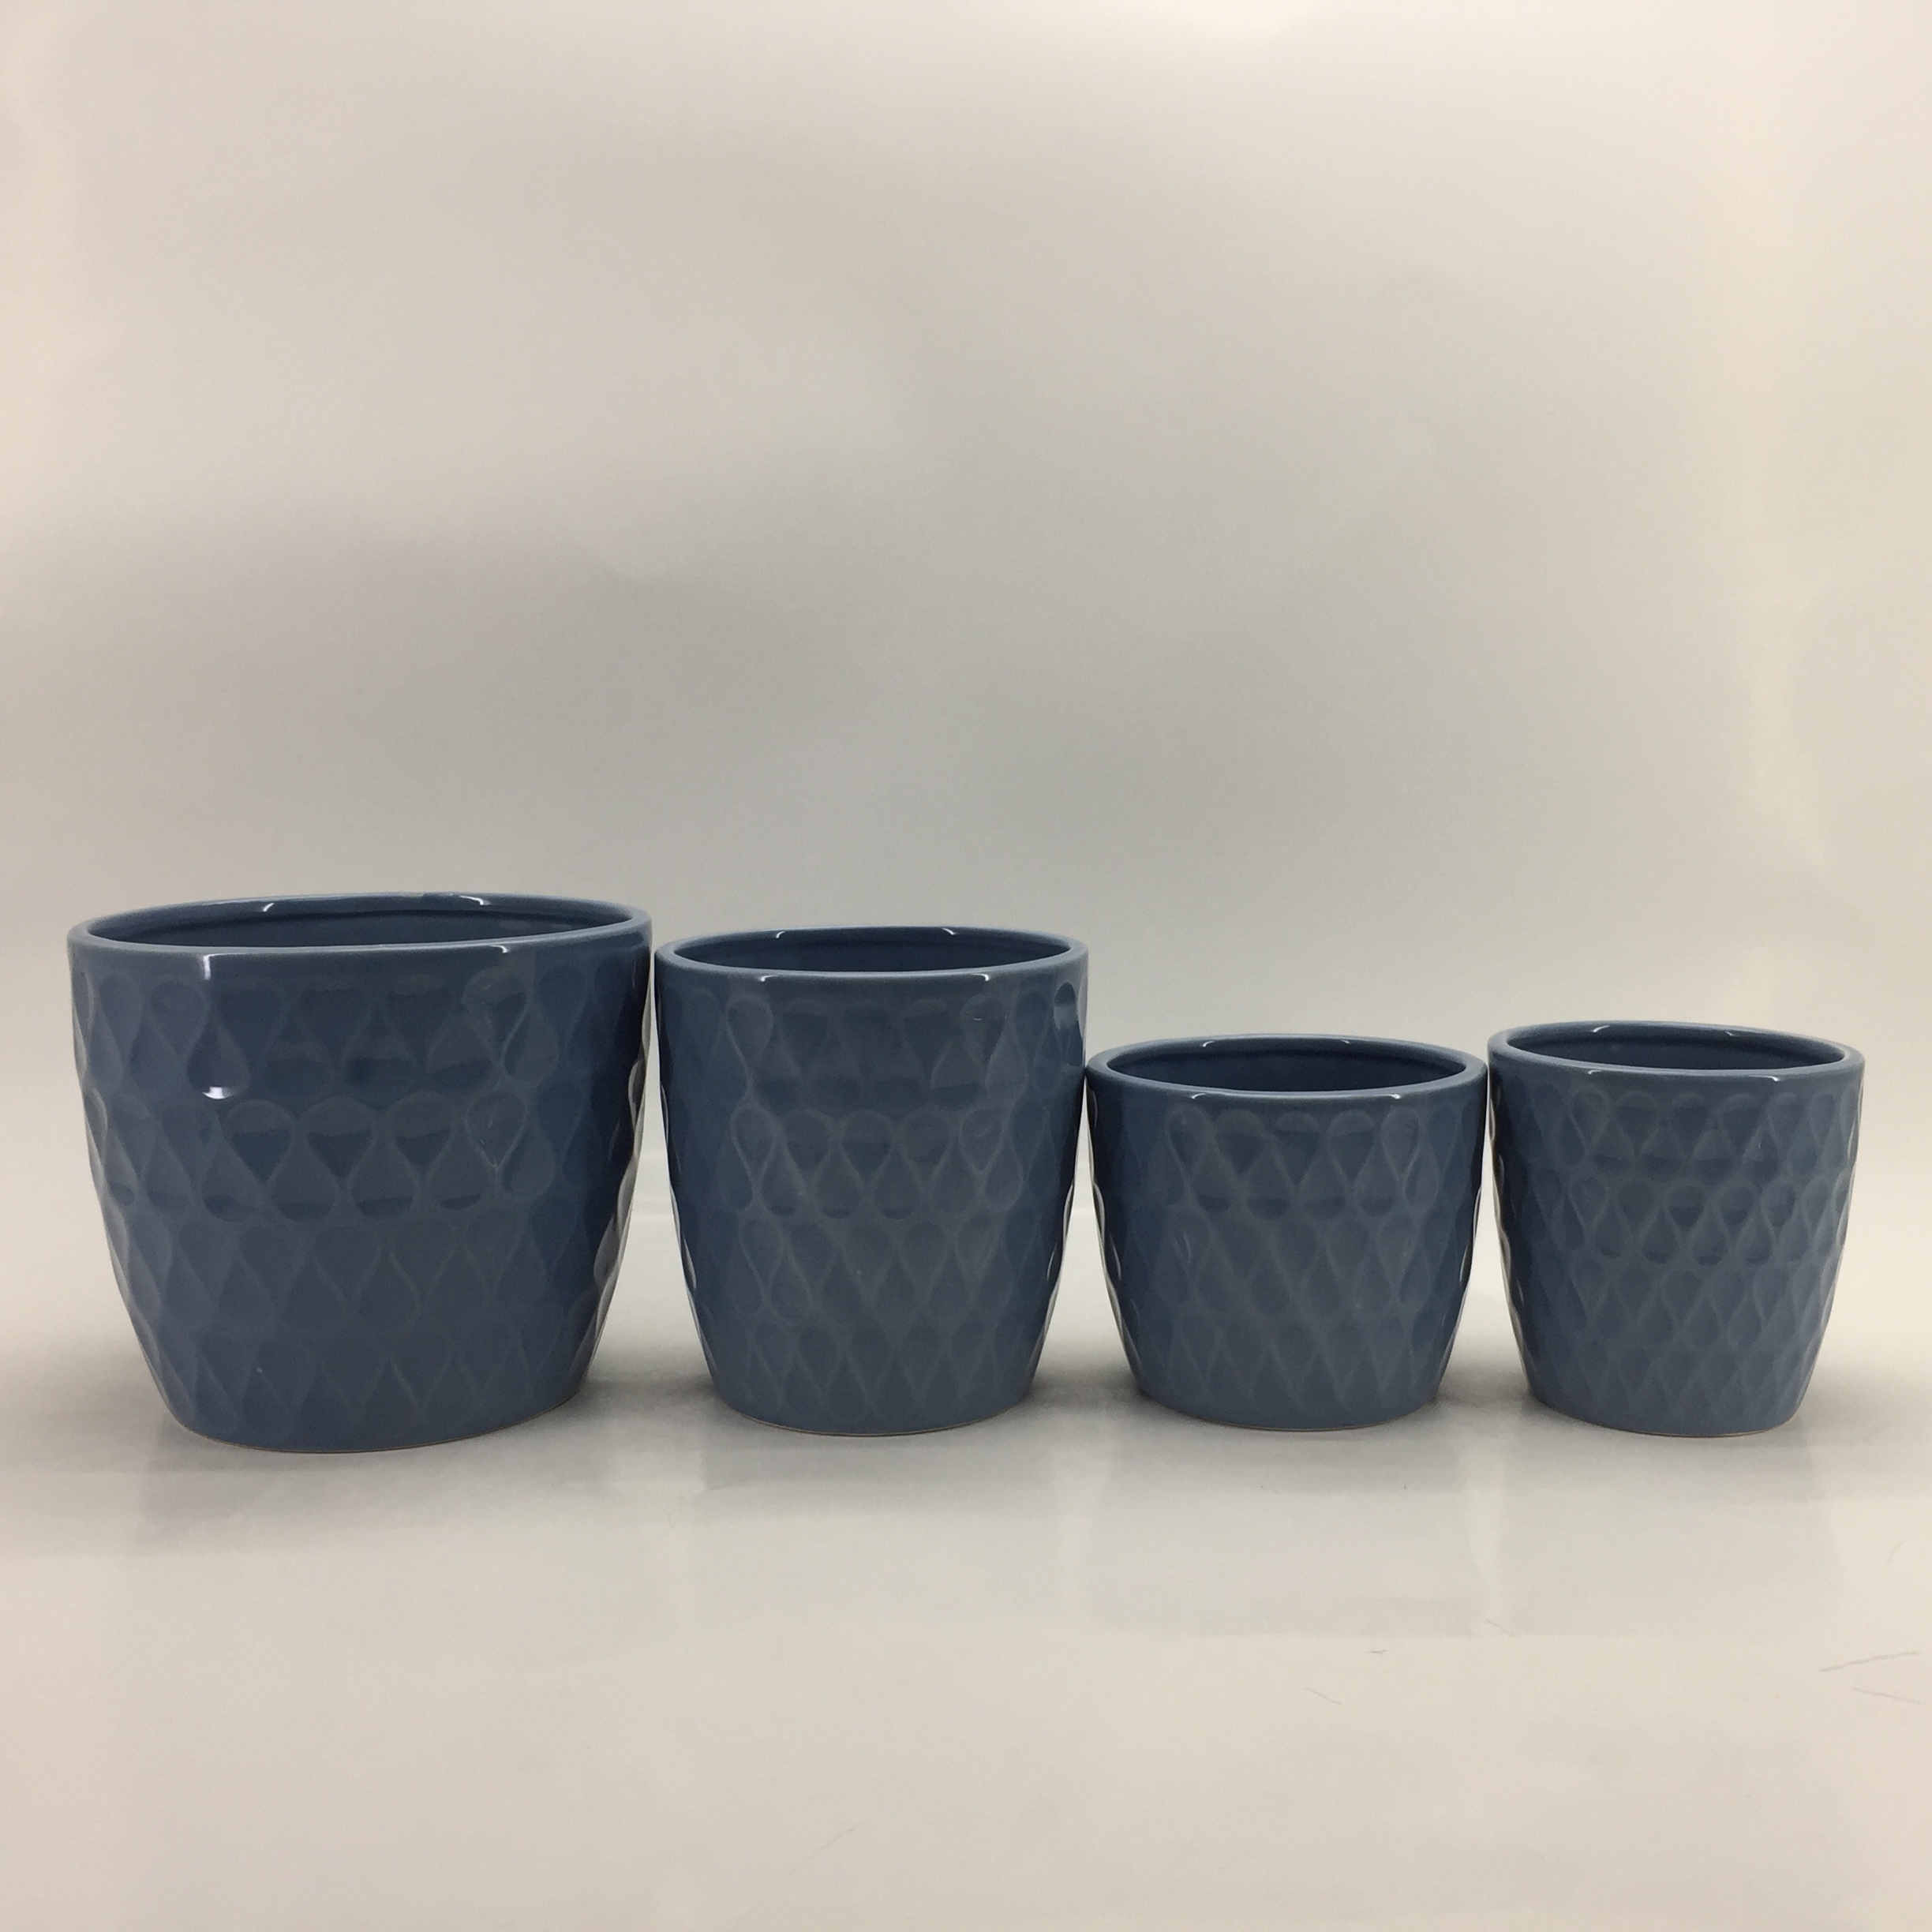 Outdoor And Indoor Decor Set of 4 Ceramic Flower Pots